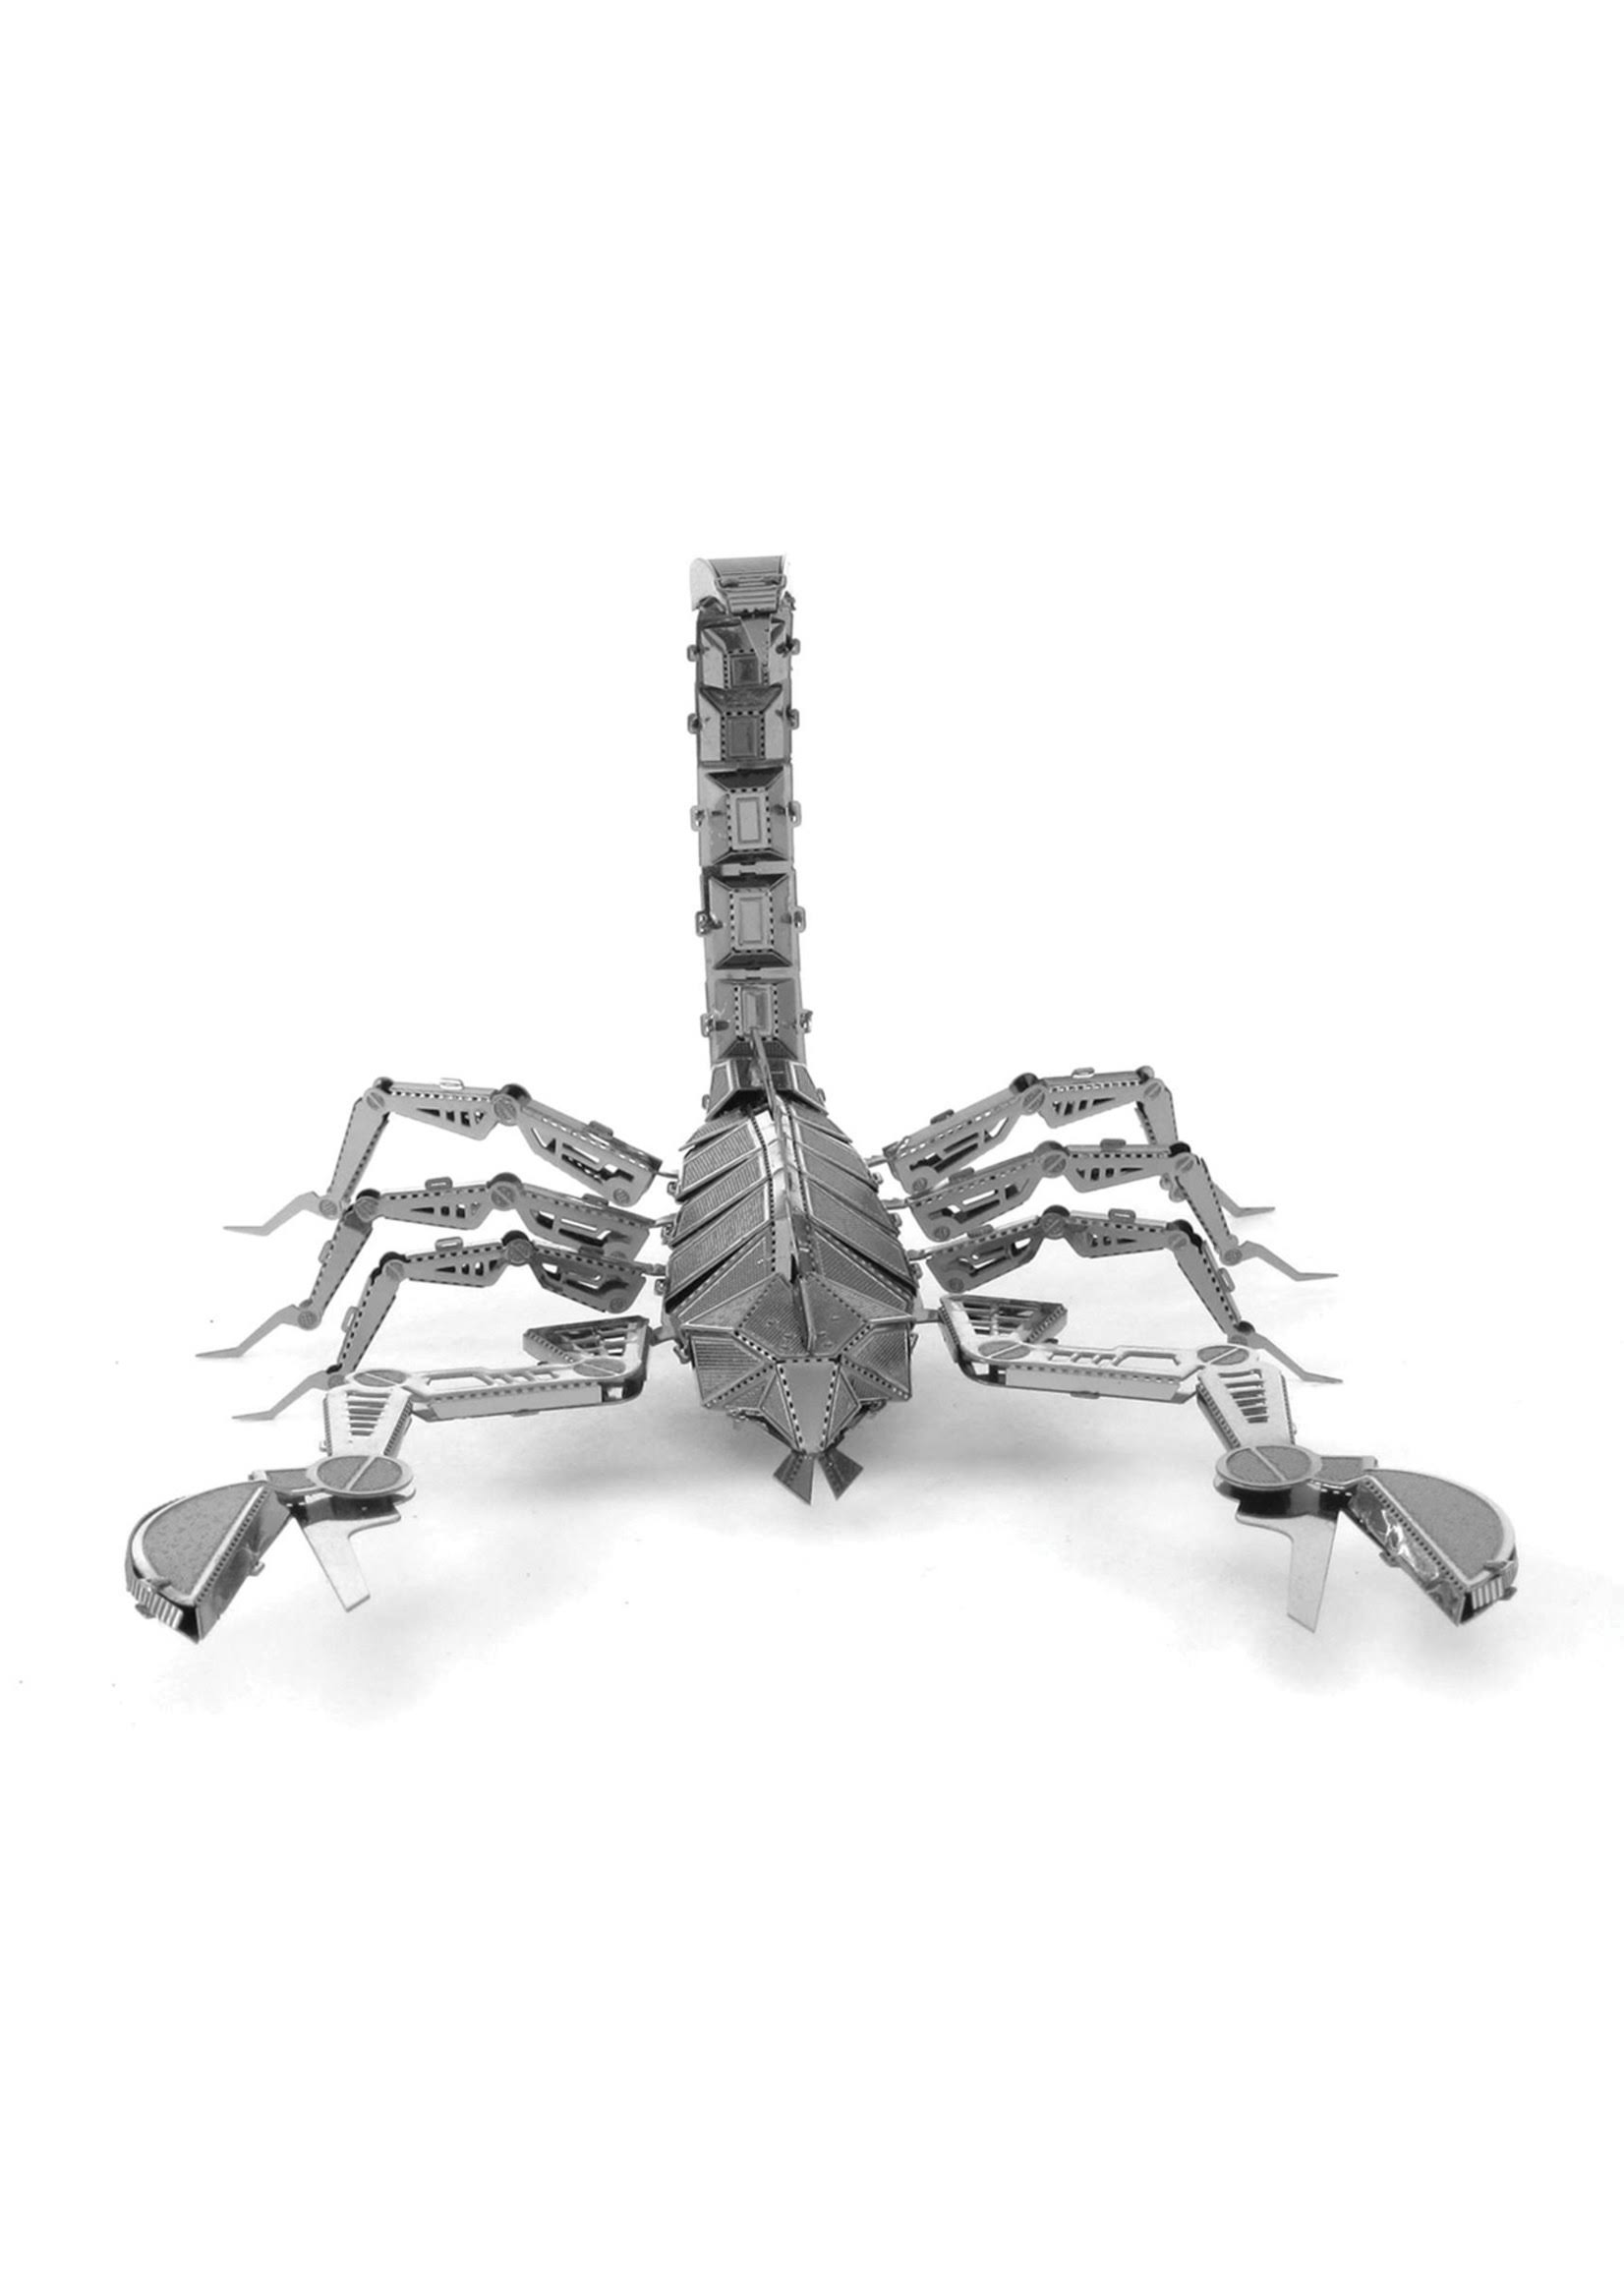 Scorpion Metal Earth 3D Model Puzzle